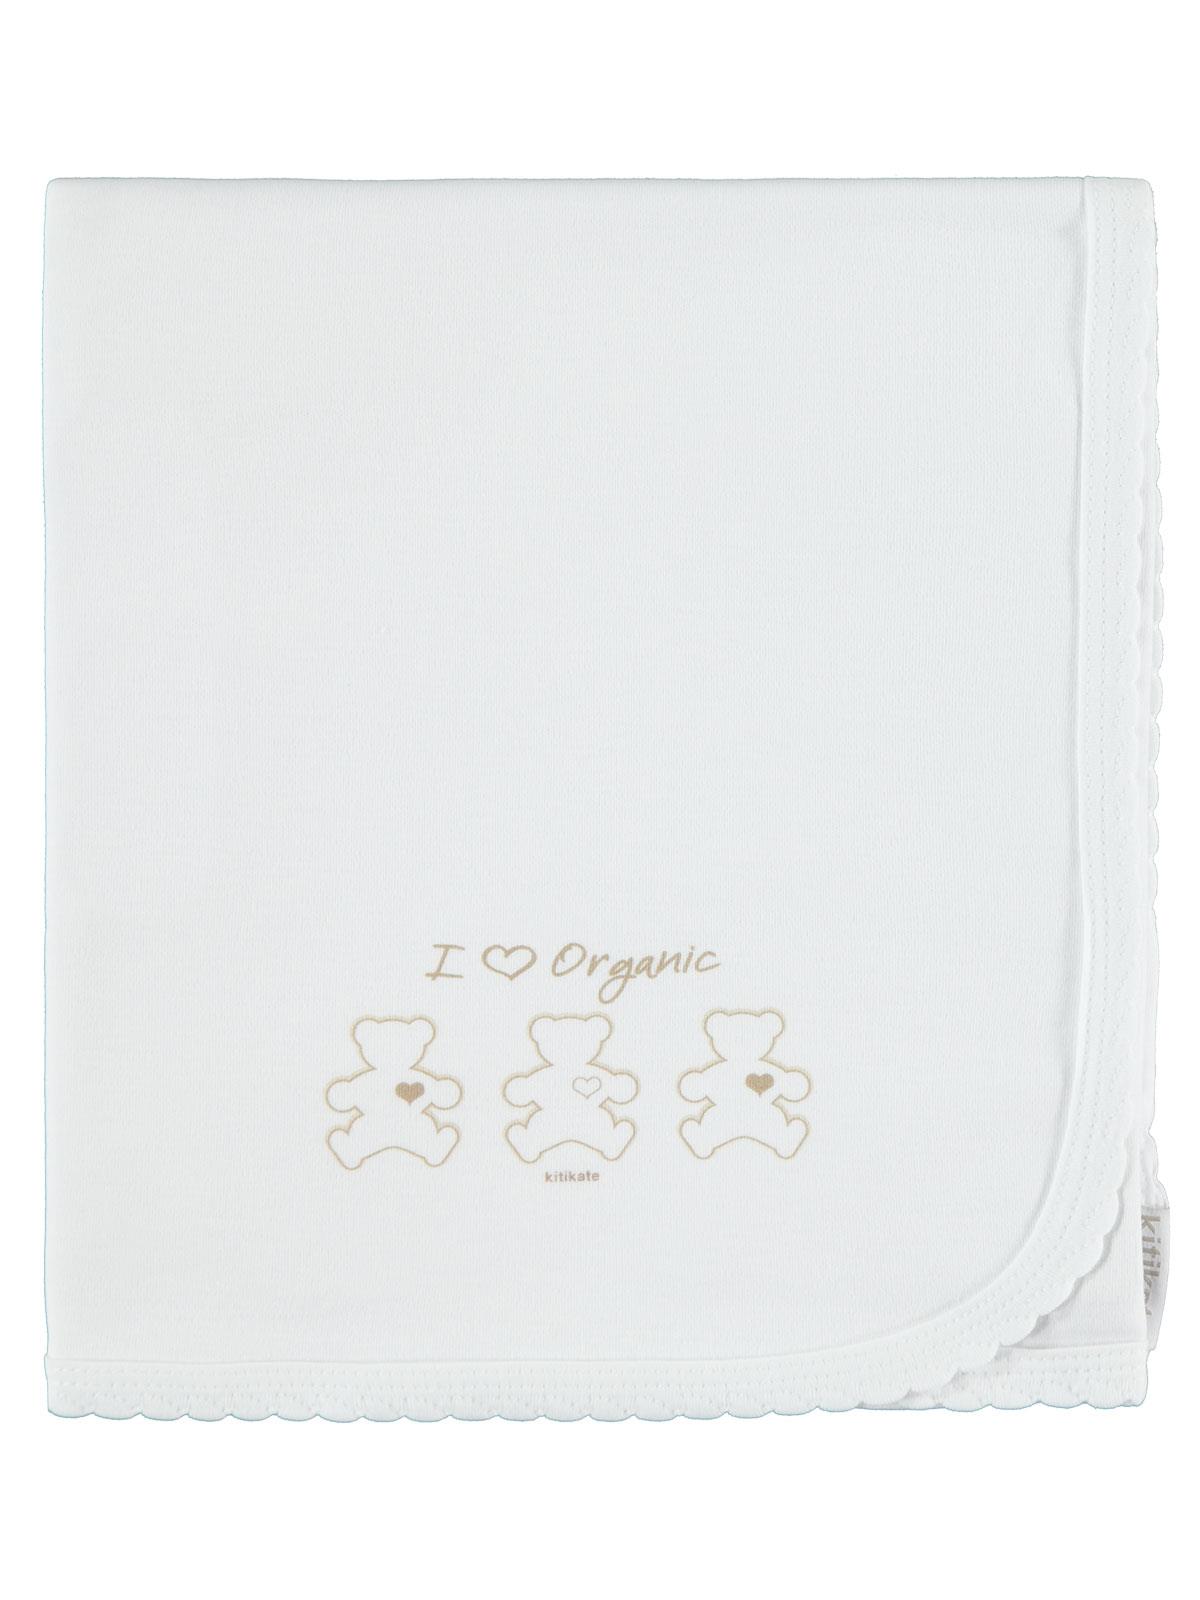 Baby Center Organik Penye Battaniye 85x95 cm Beyaz